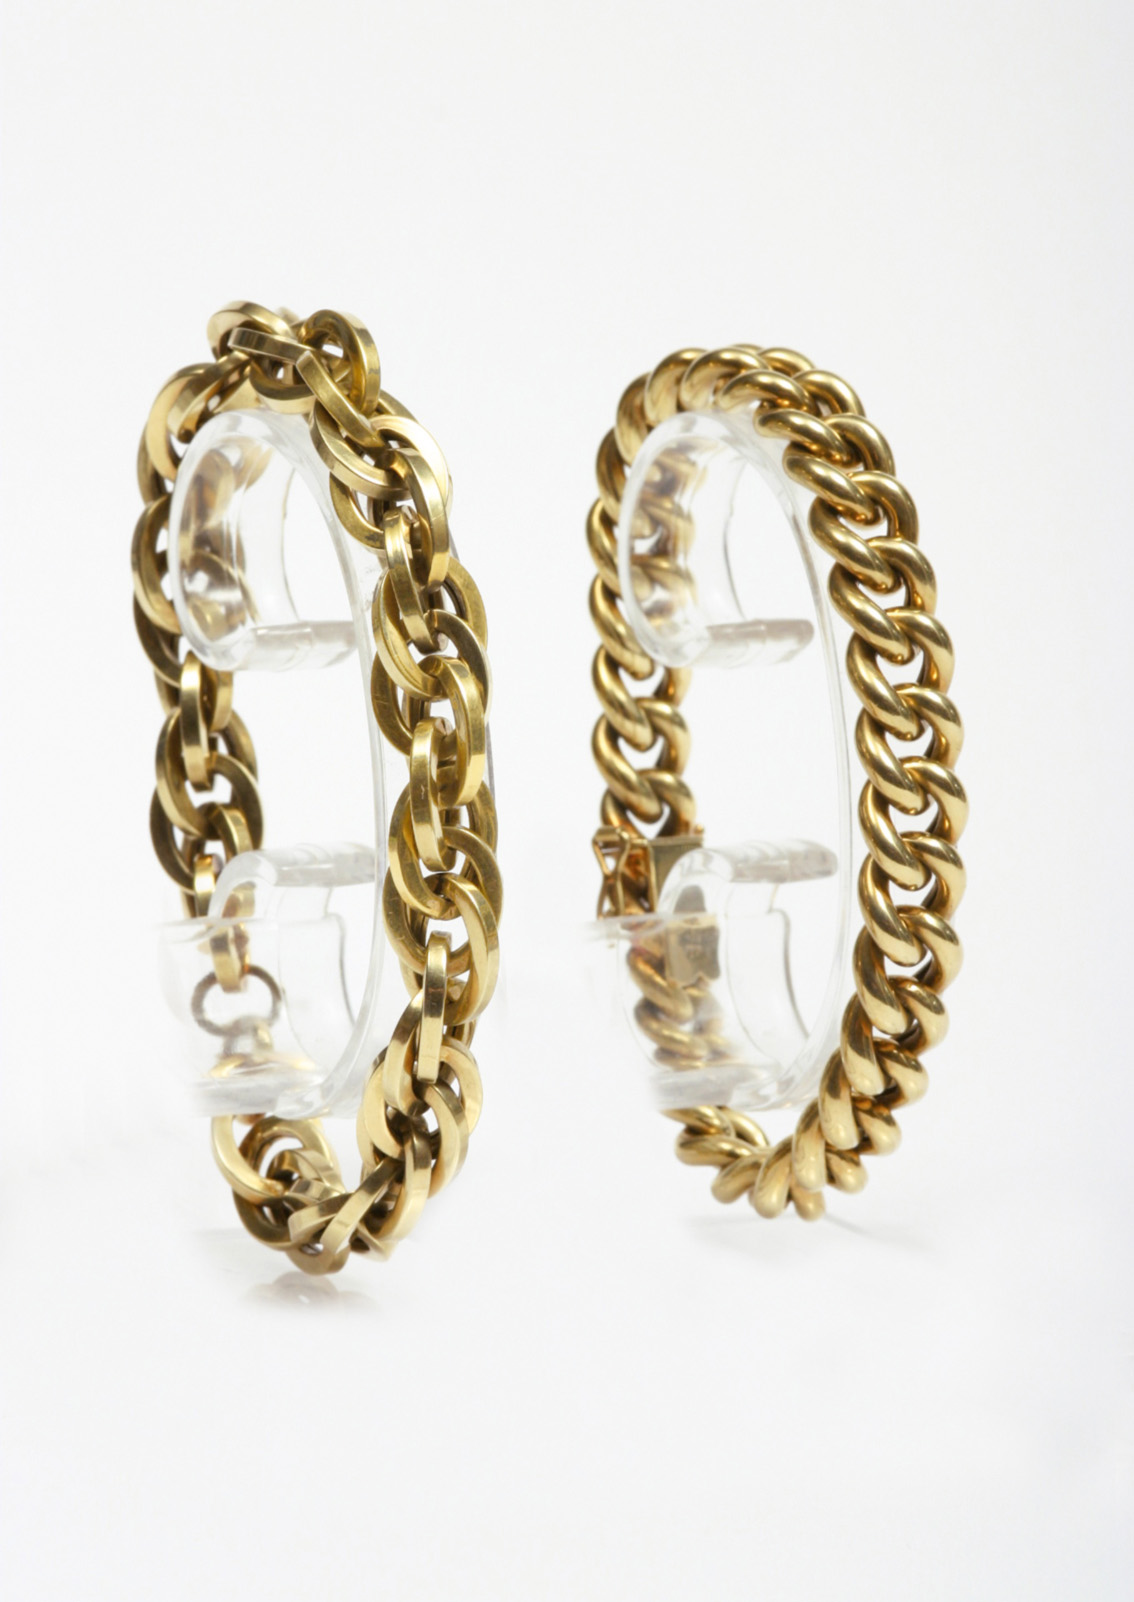 A pair of golden bracelet